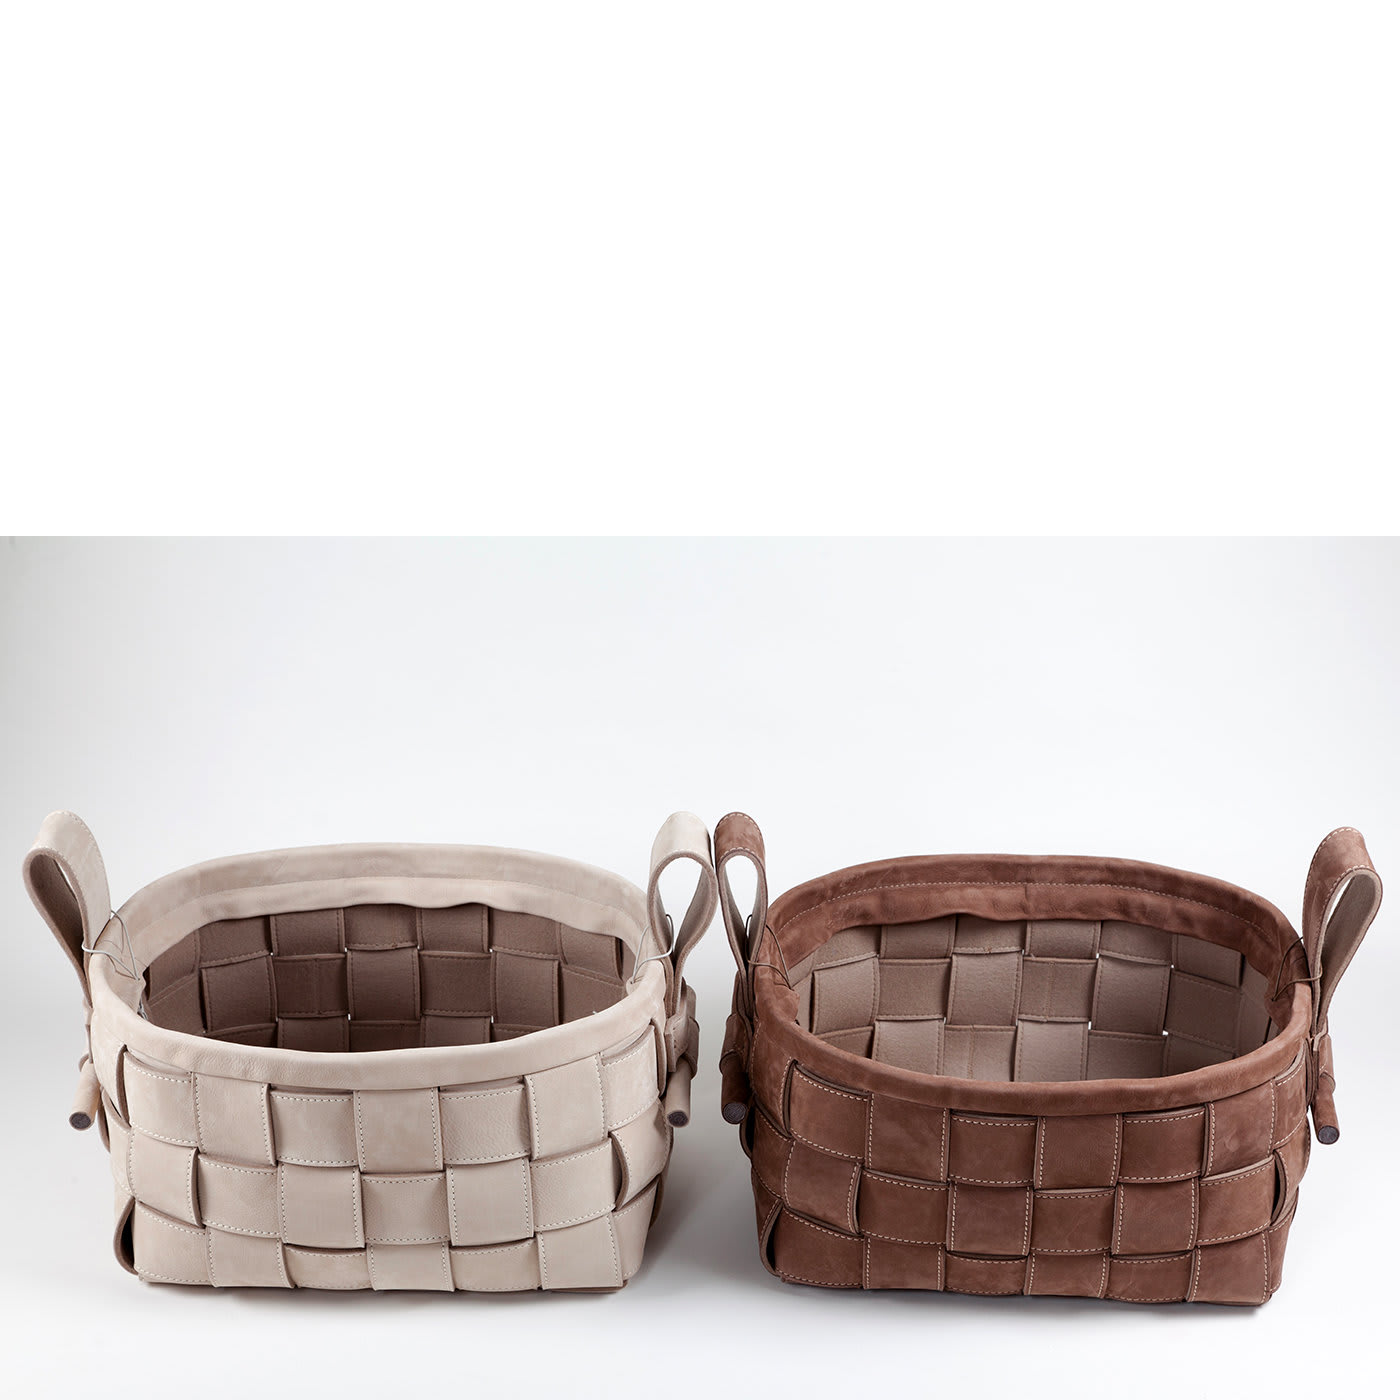 Woven Leather Basket Brown - Bottega Conticelli